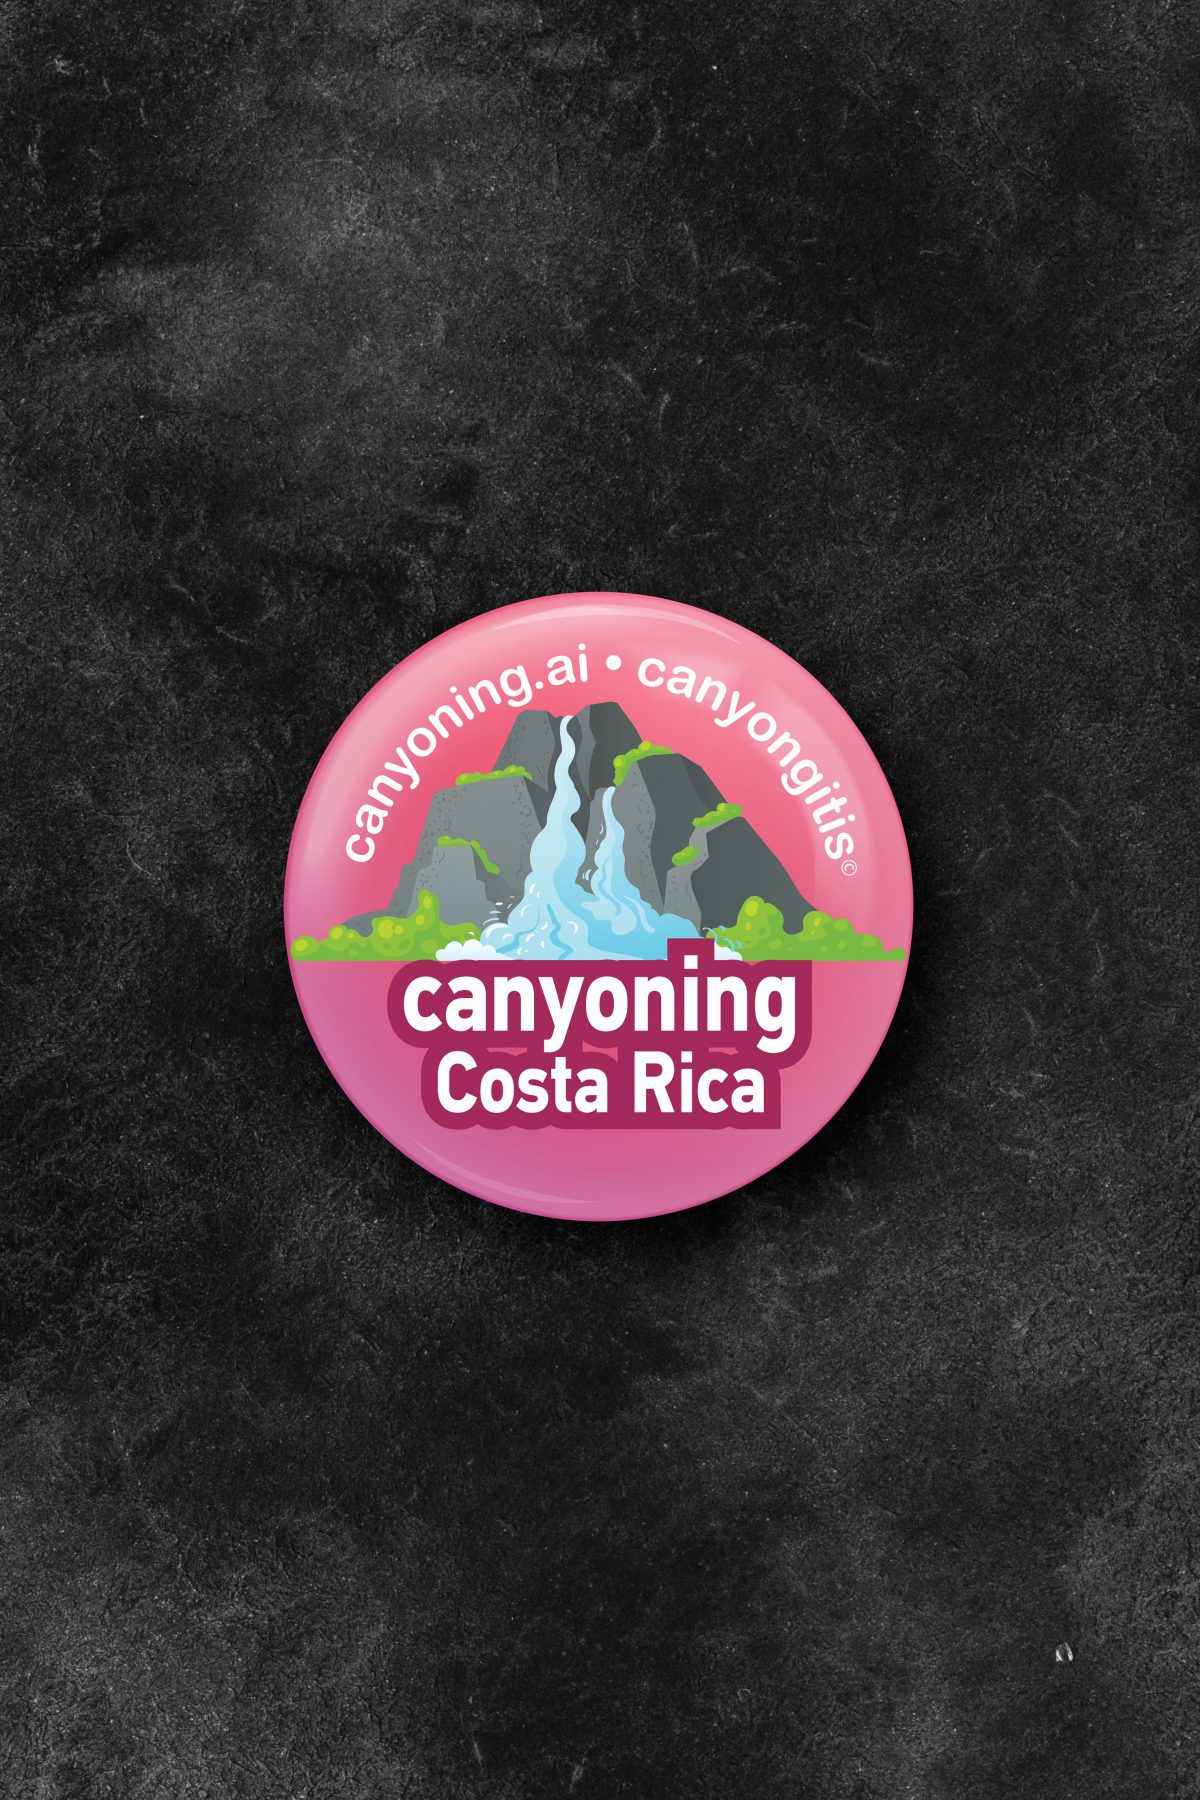 Canyoning Costa Rica badge image